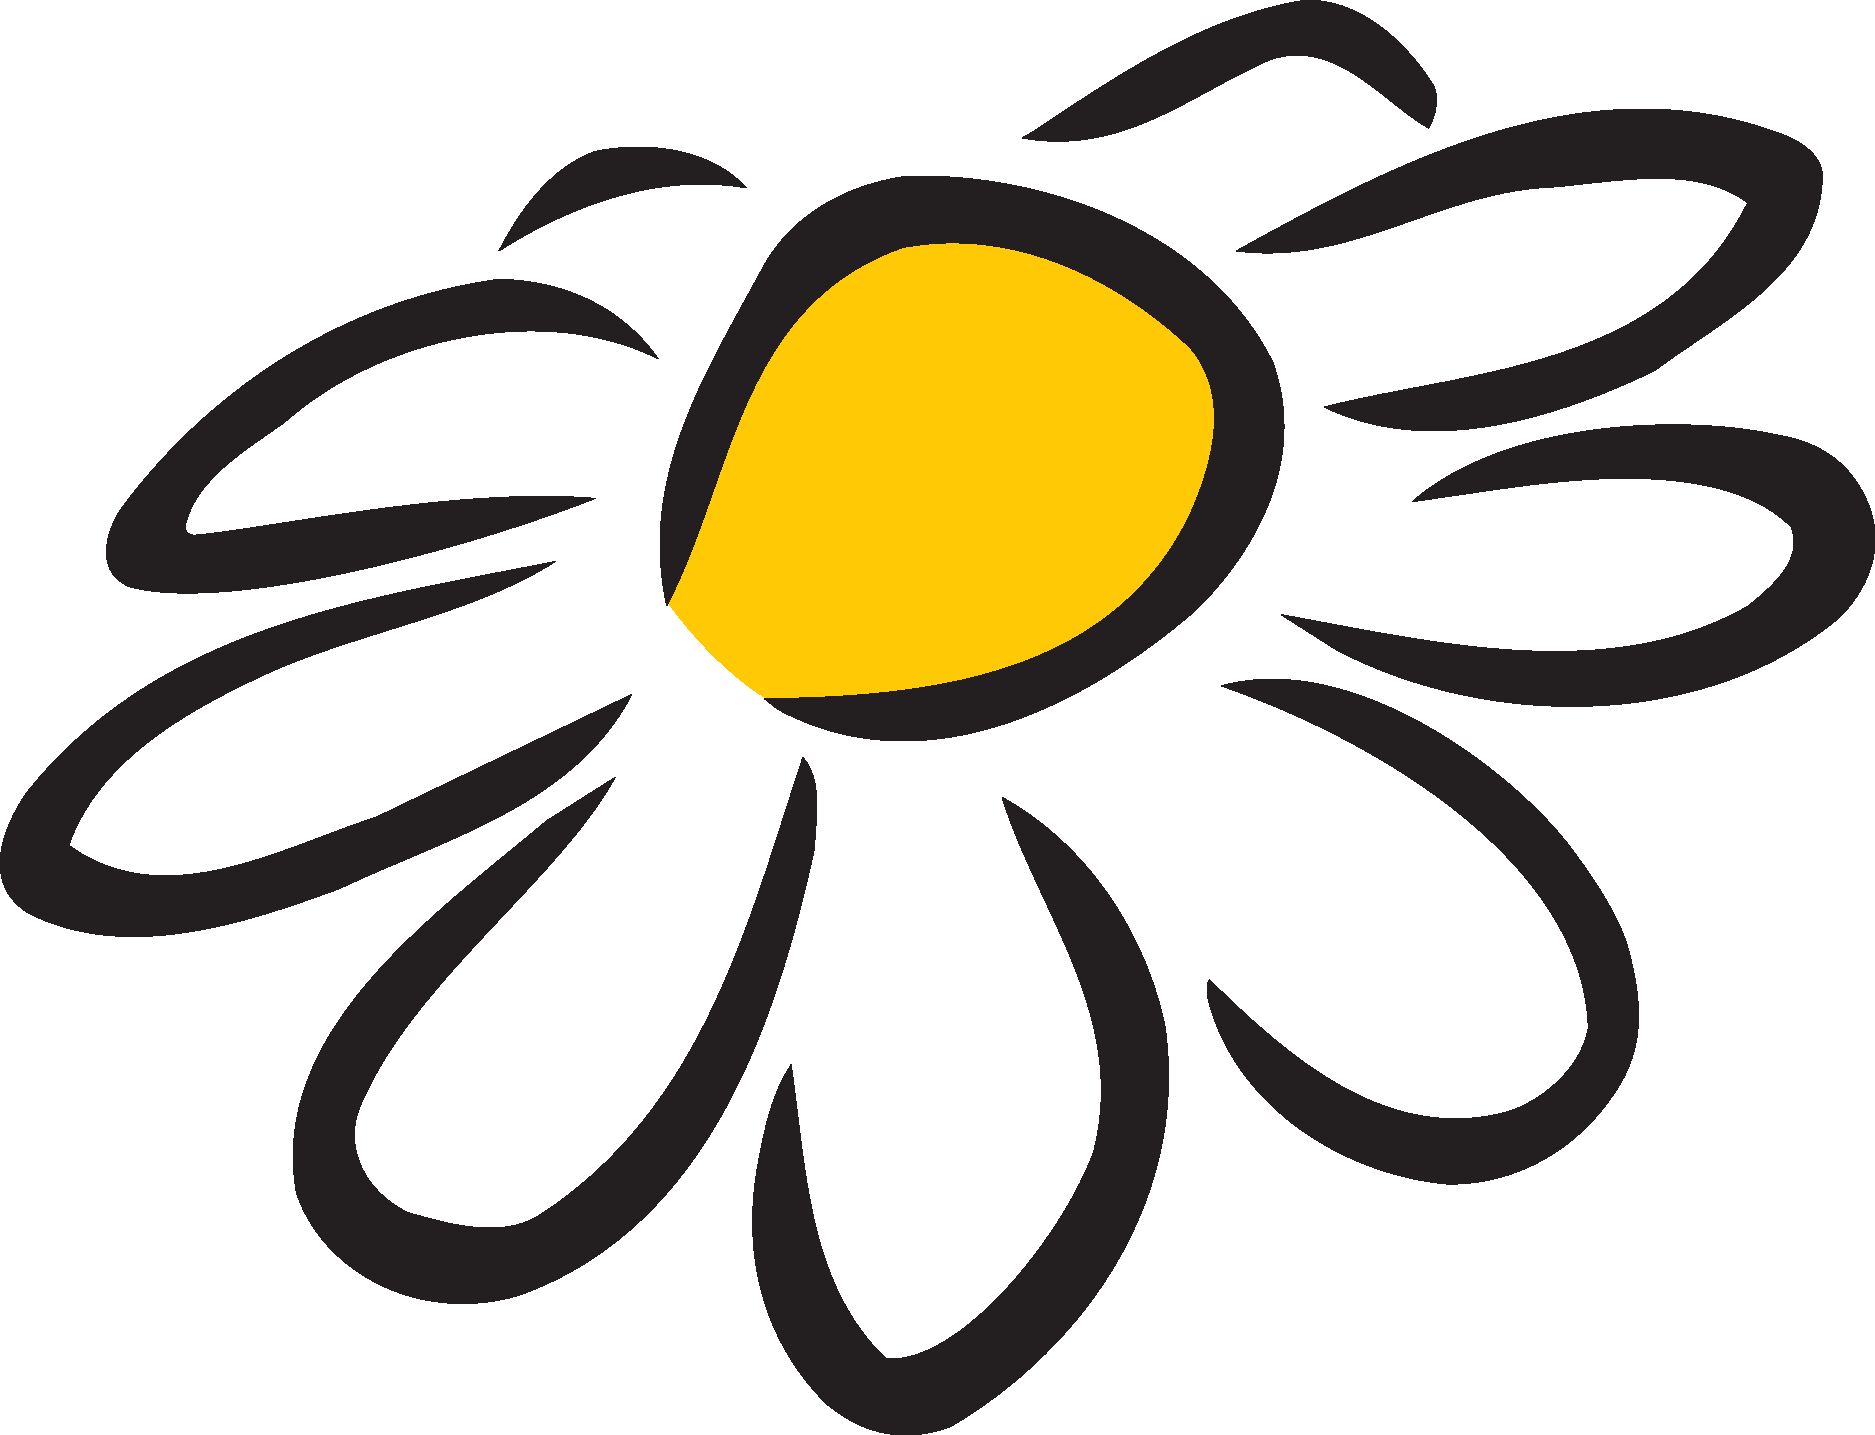 Символ цветка ромашка